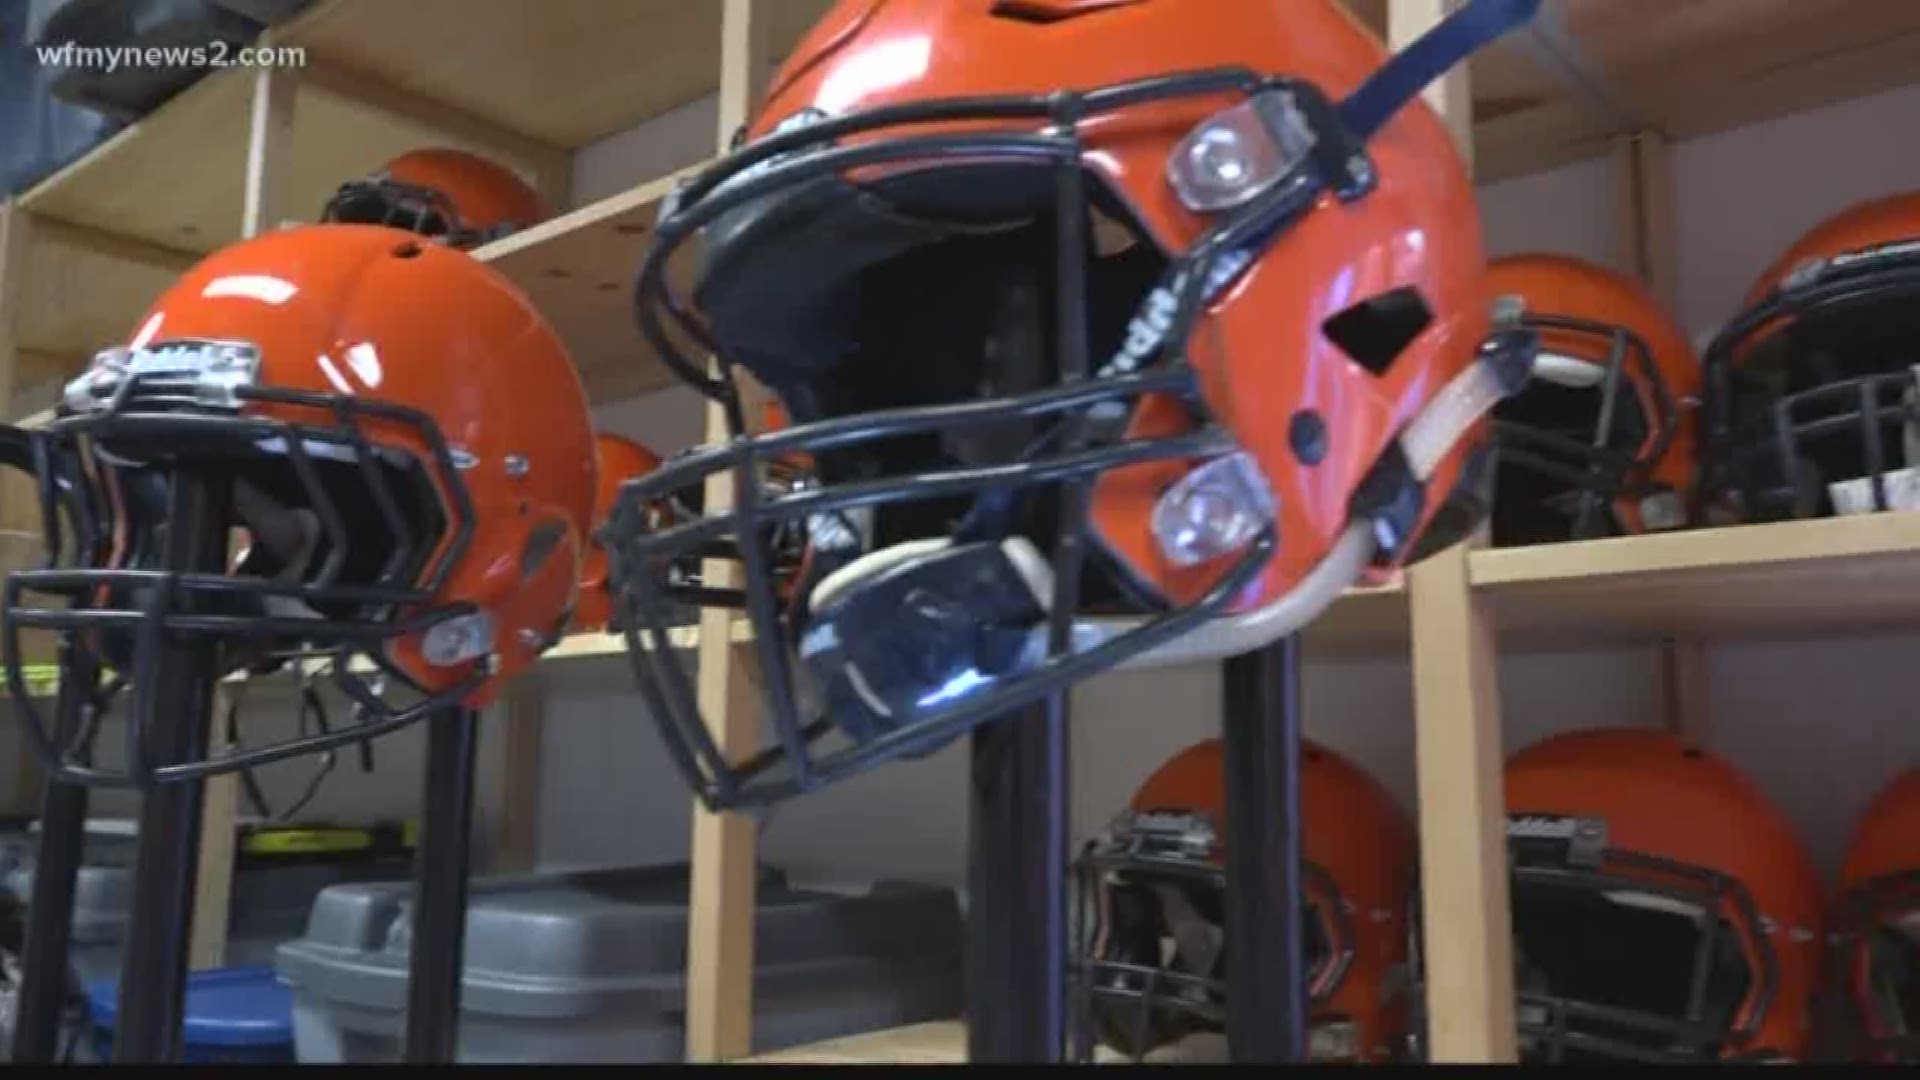 5 Star Helmets At Local High School